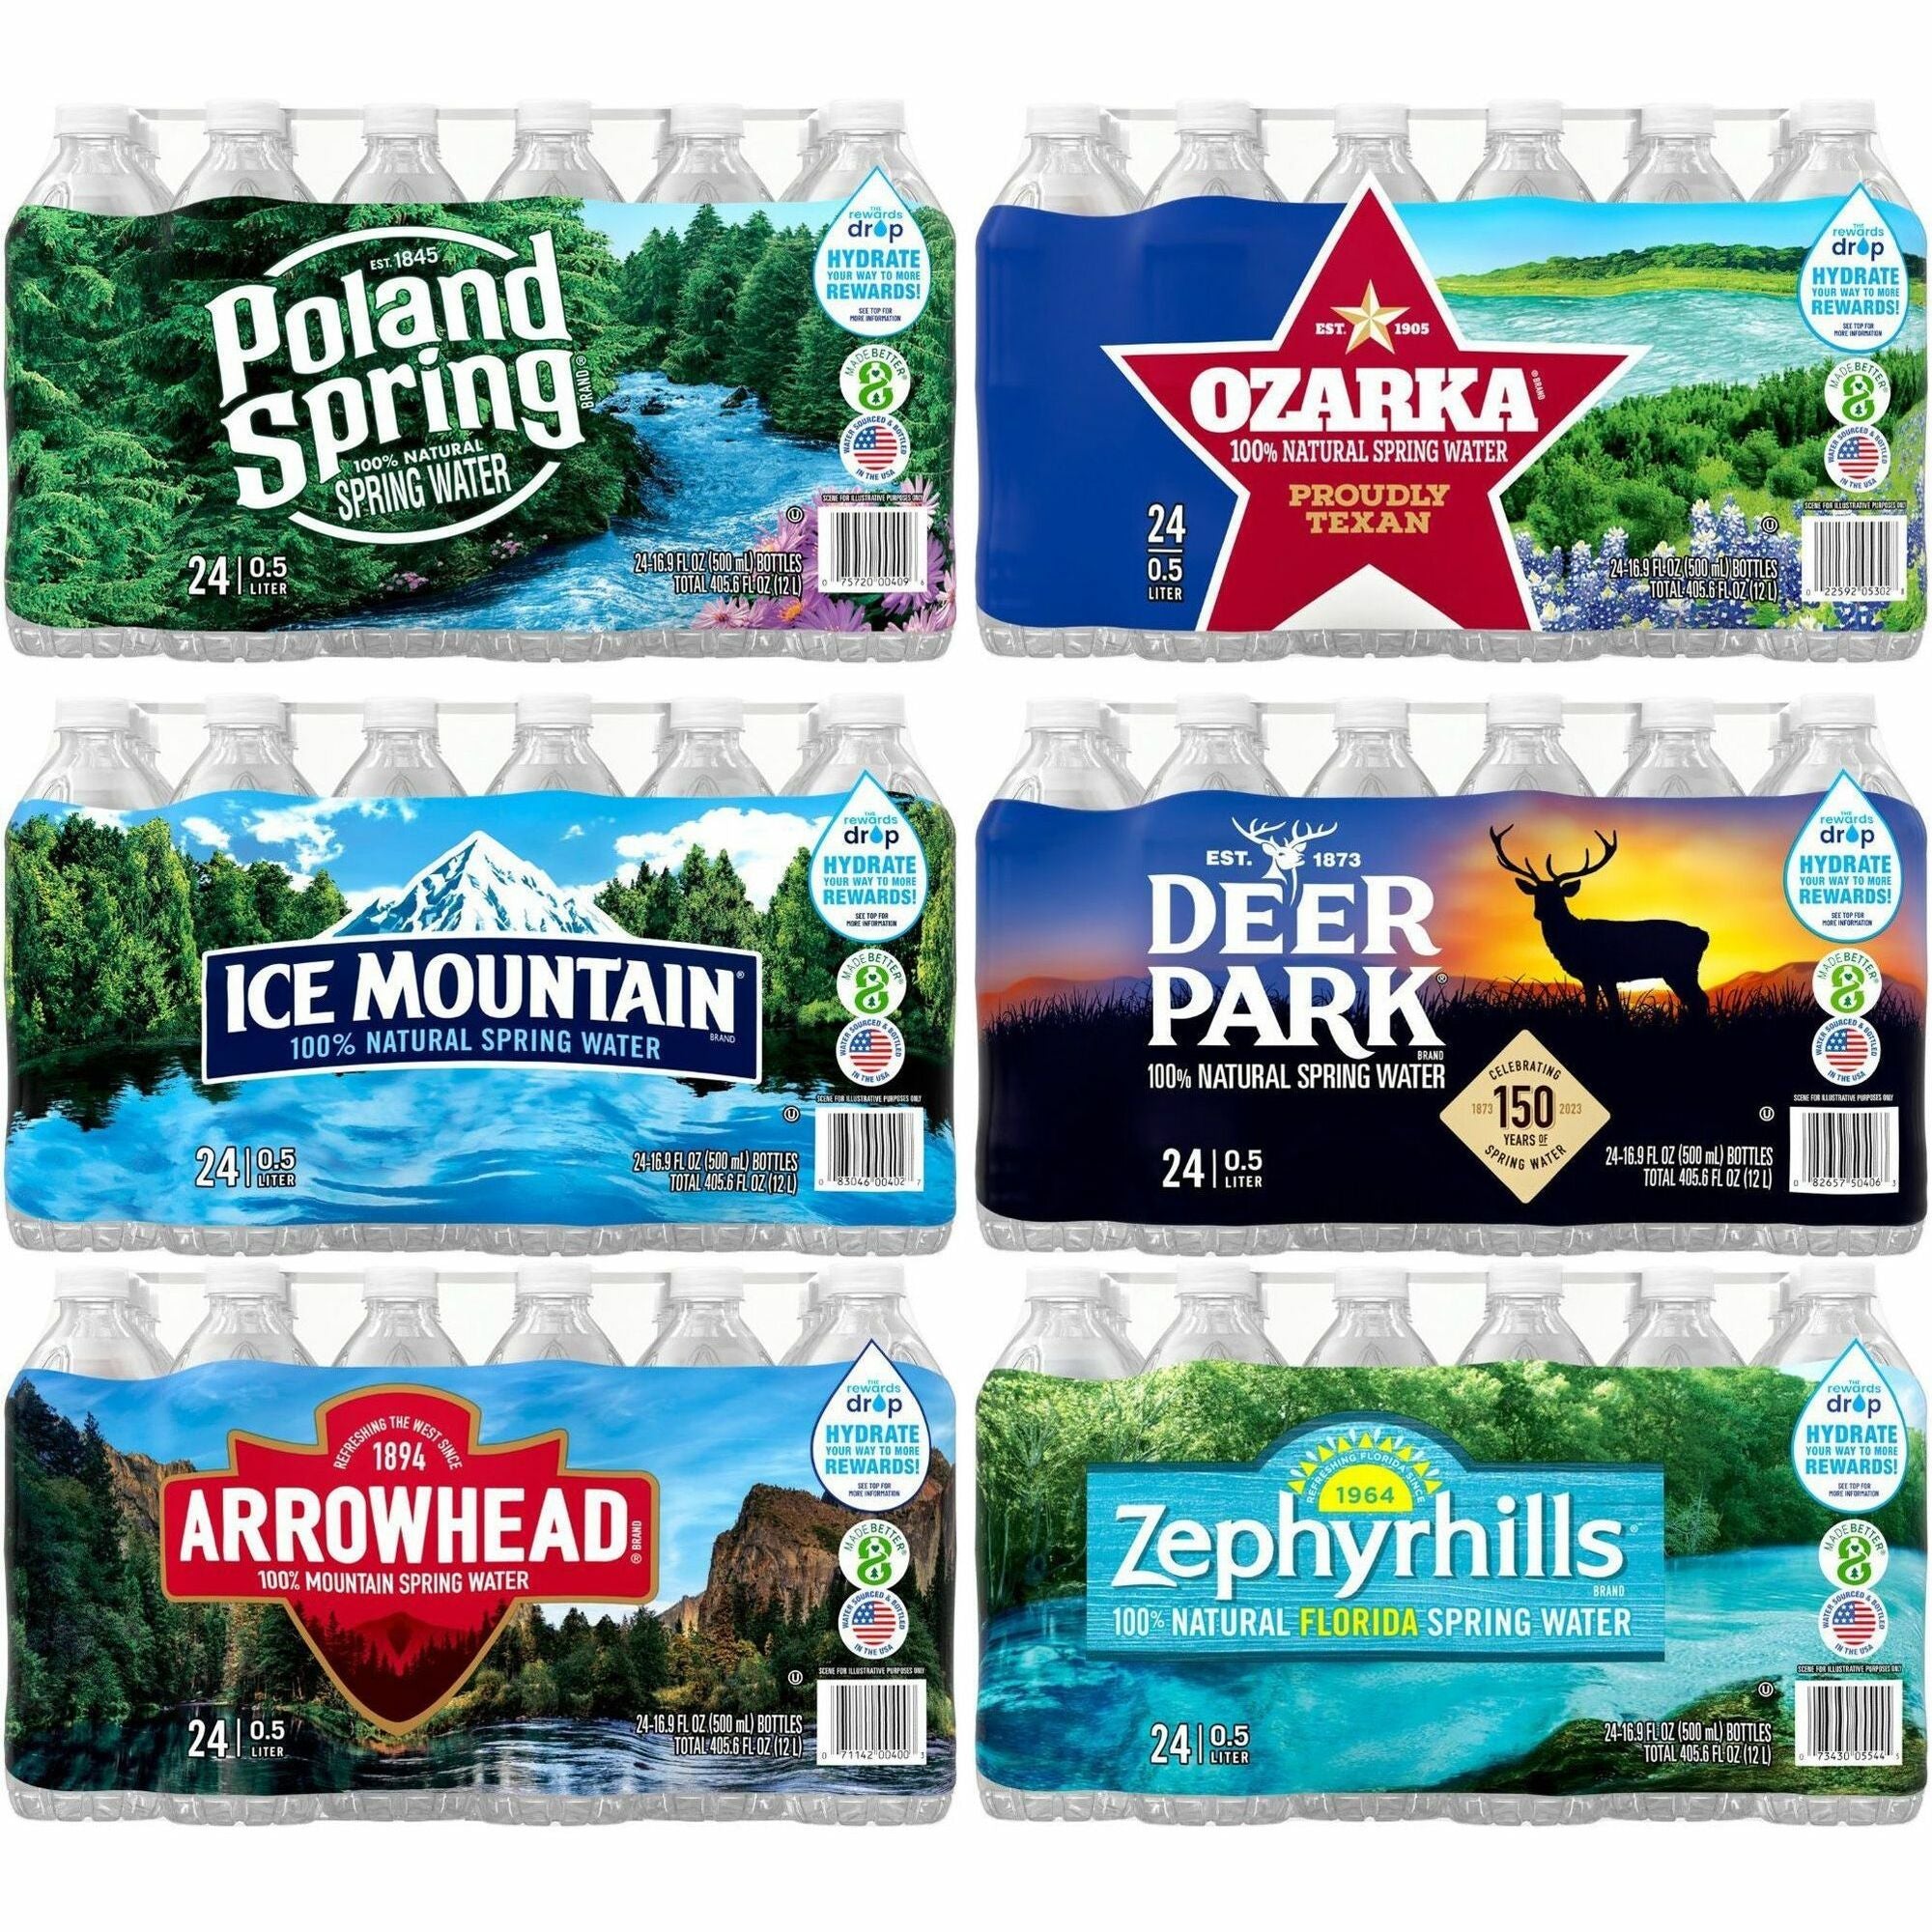 nestle-premium-bottled-spring-water-ready-to-drink-1691-fl-oz-500-ml-bottle-1872-pallet_nle101243pl - 1